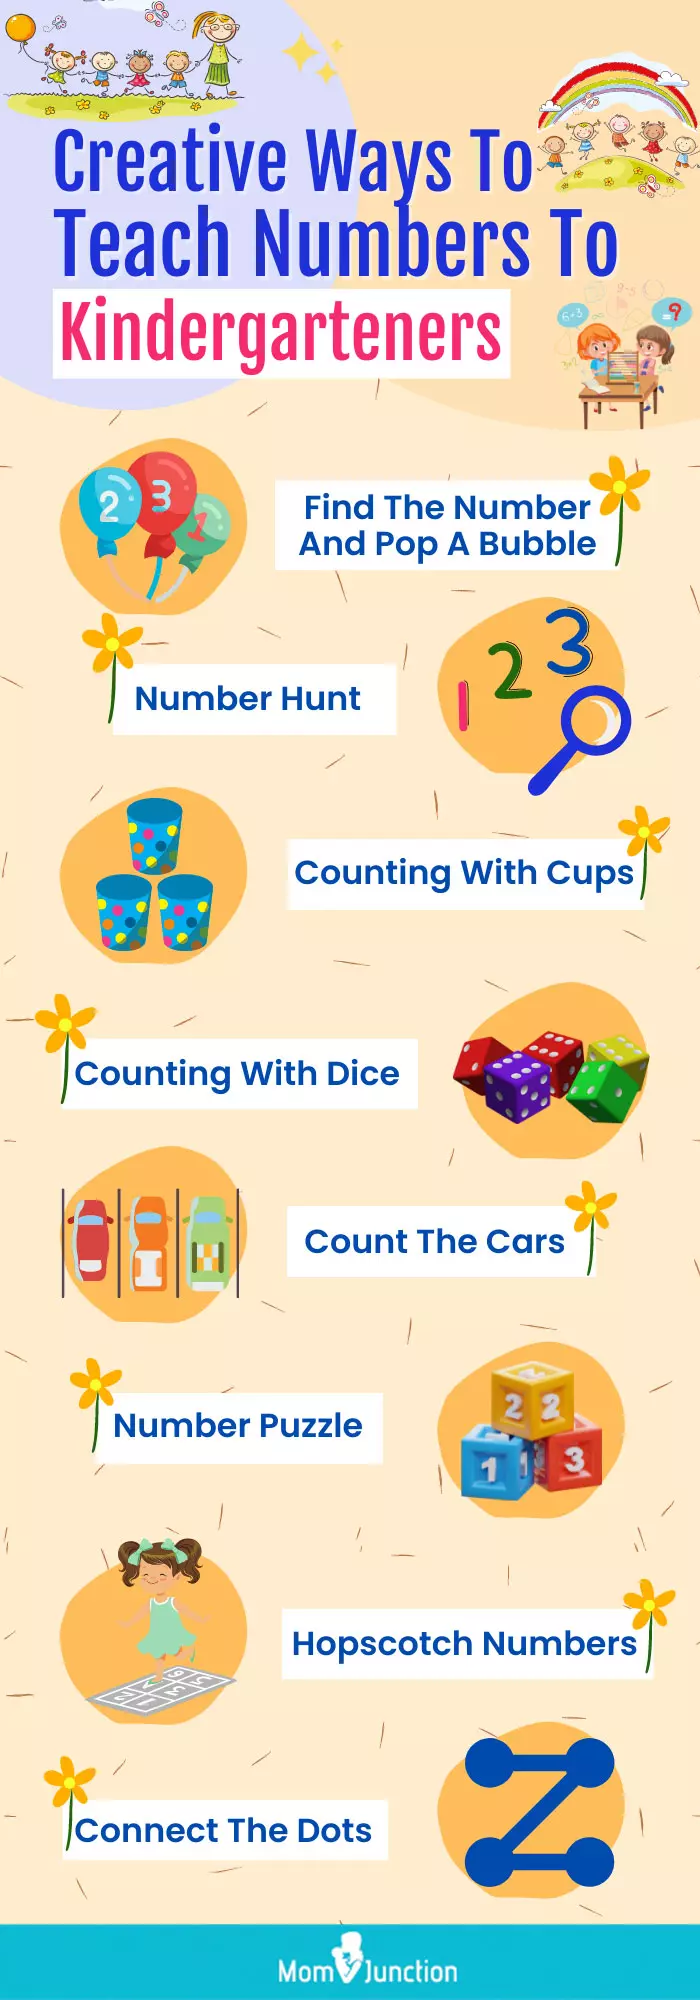 creative ways to teach numbers to kindergarteners (infographic)